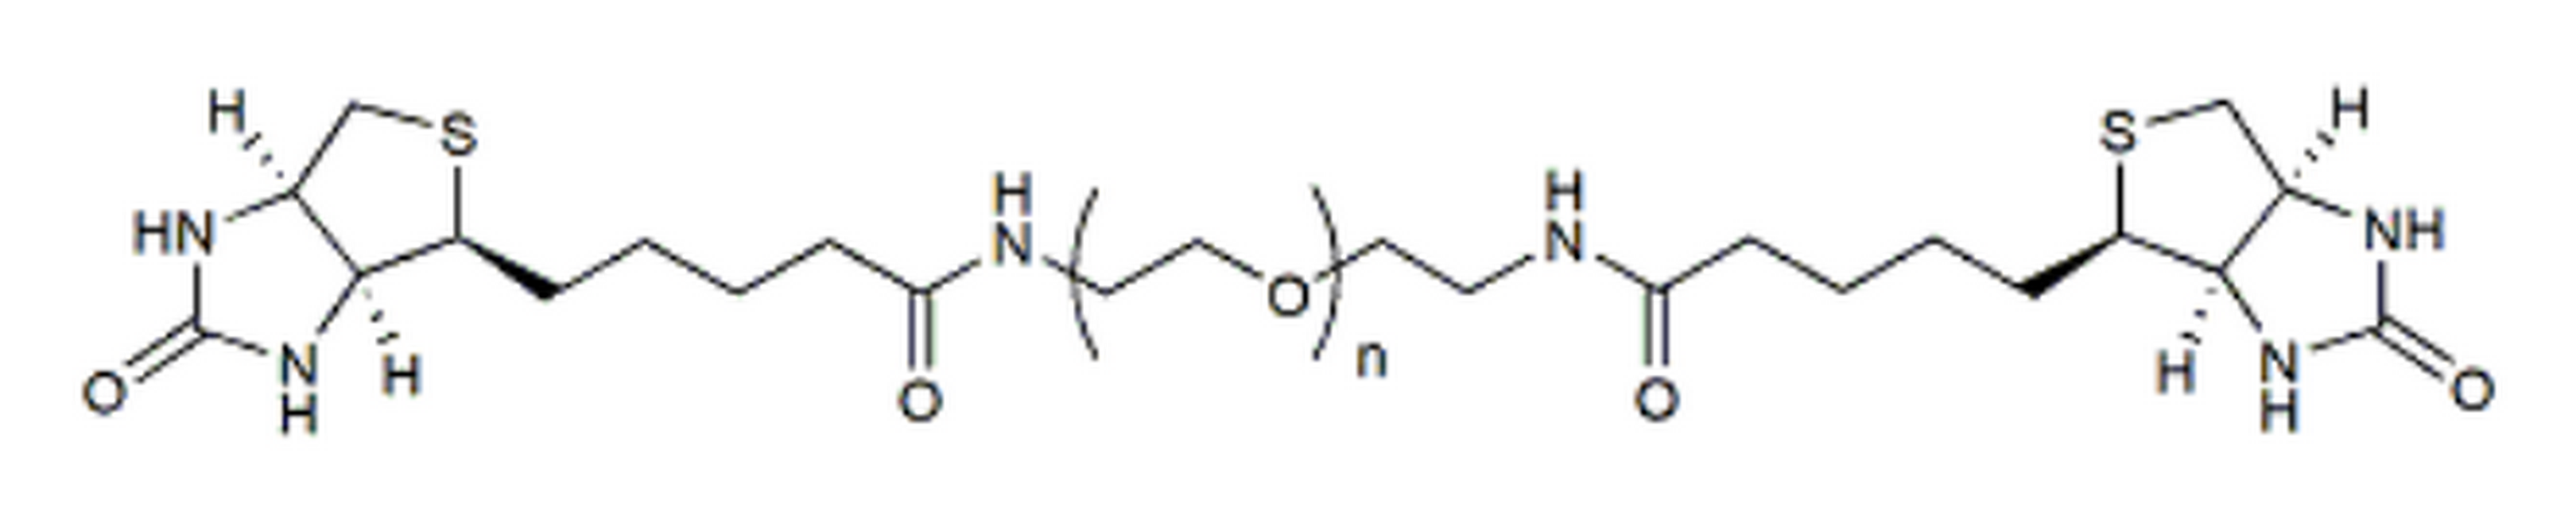 Biotin-PEG-Biotin, MW 3.4K